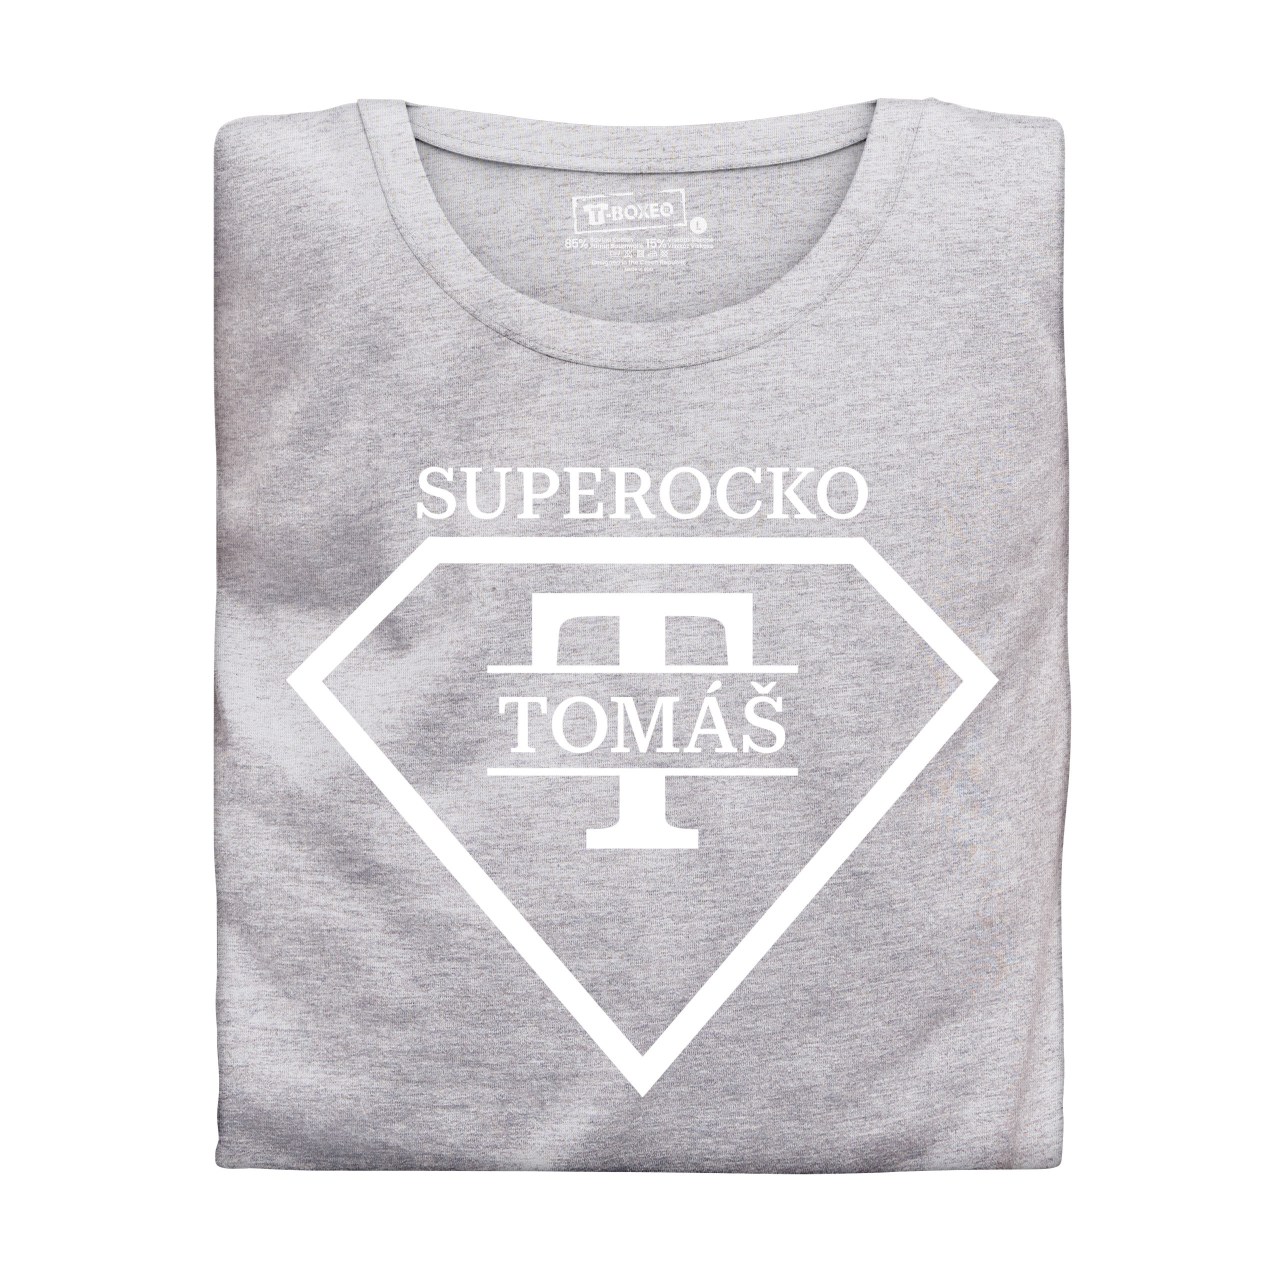 Pánské tričko s motivem "Supertáta" - se jménem a inciálem SK